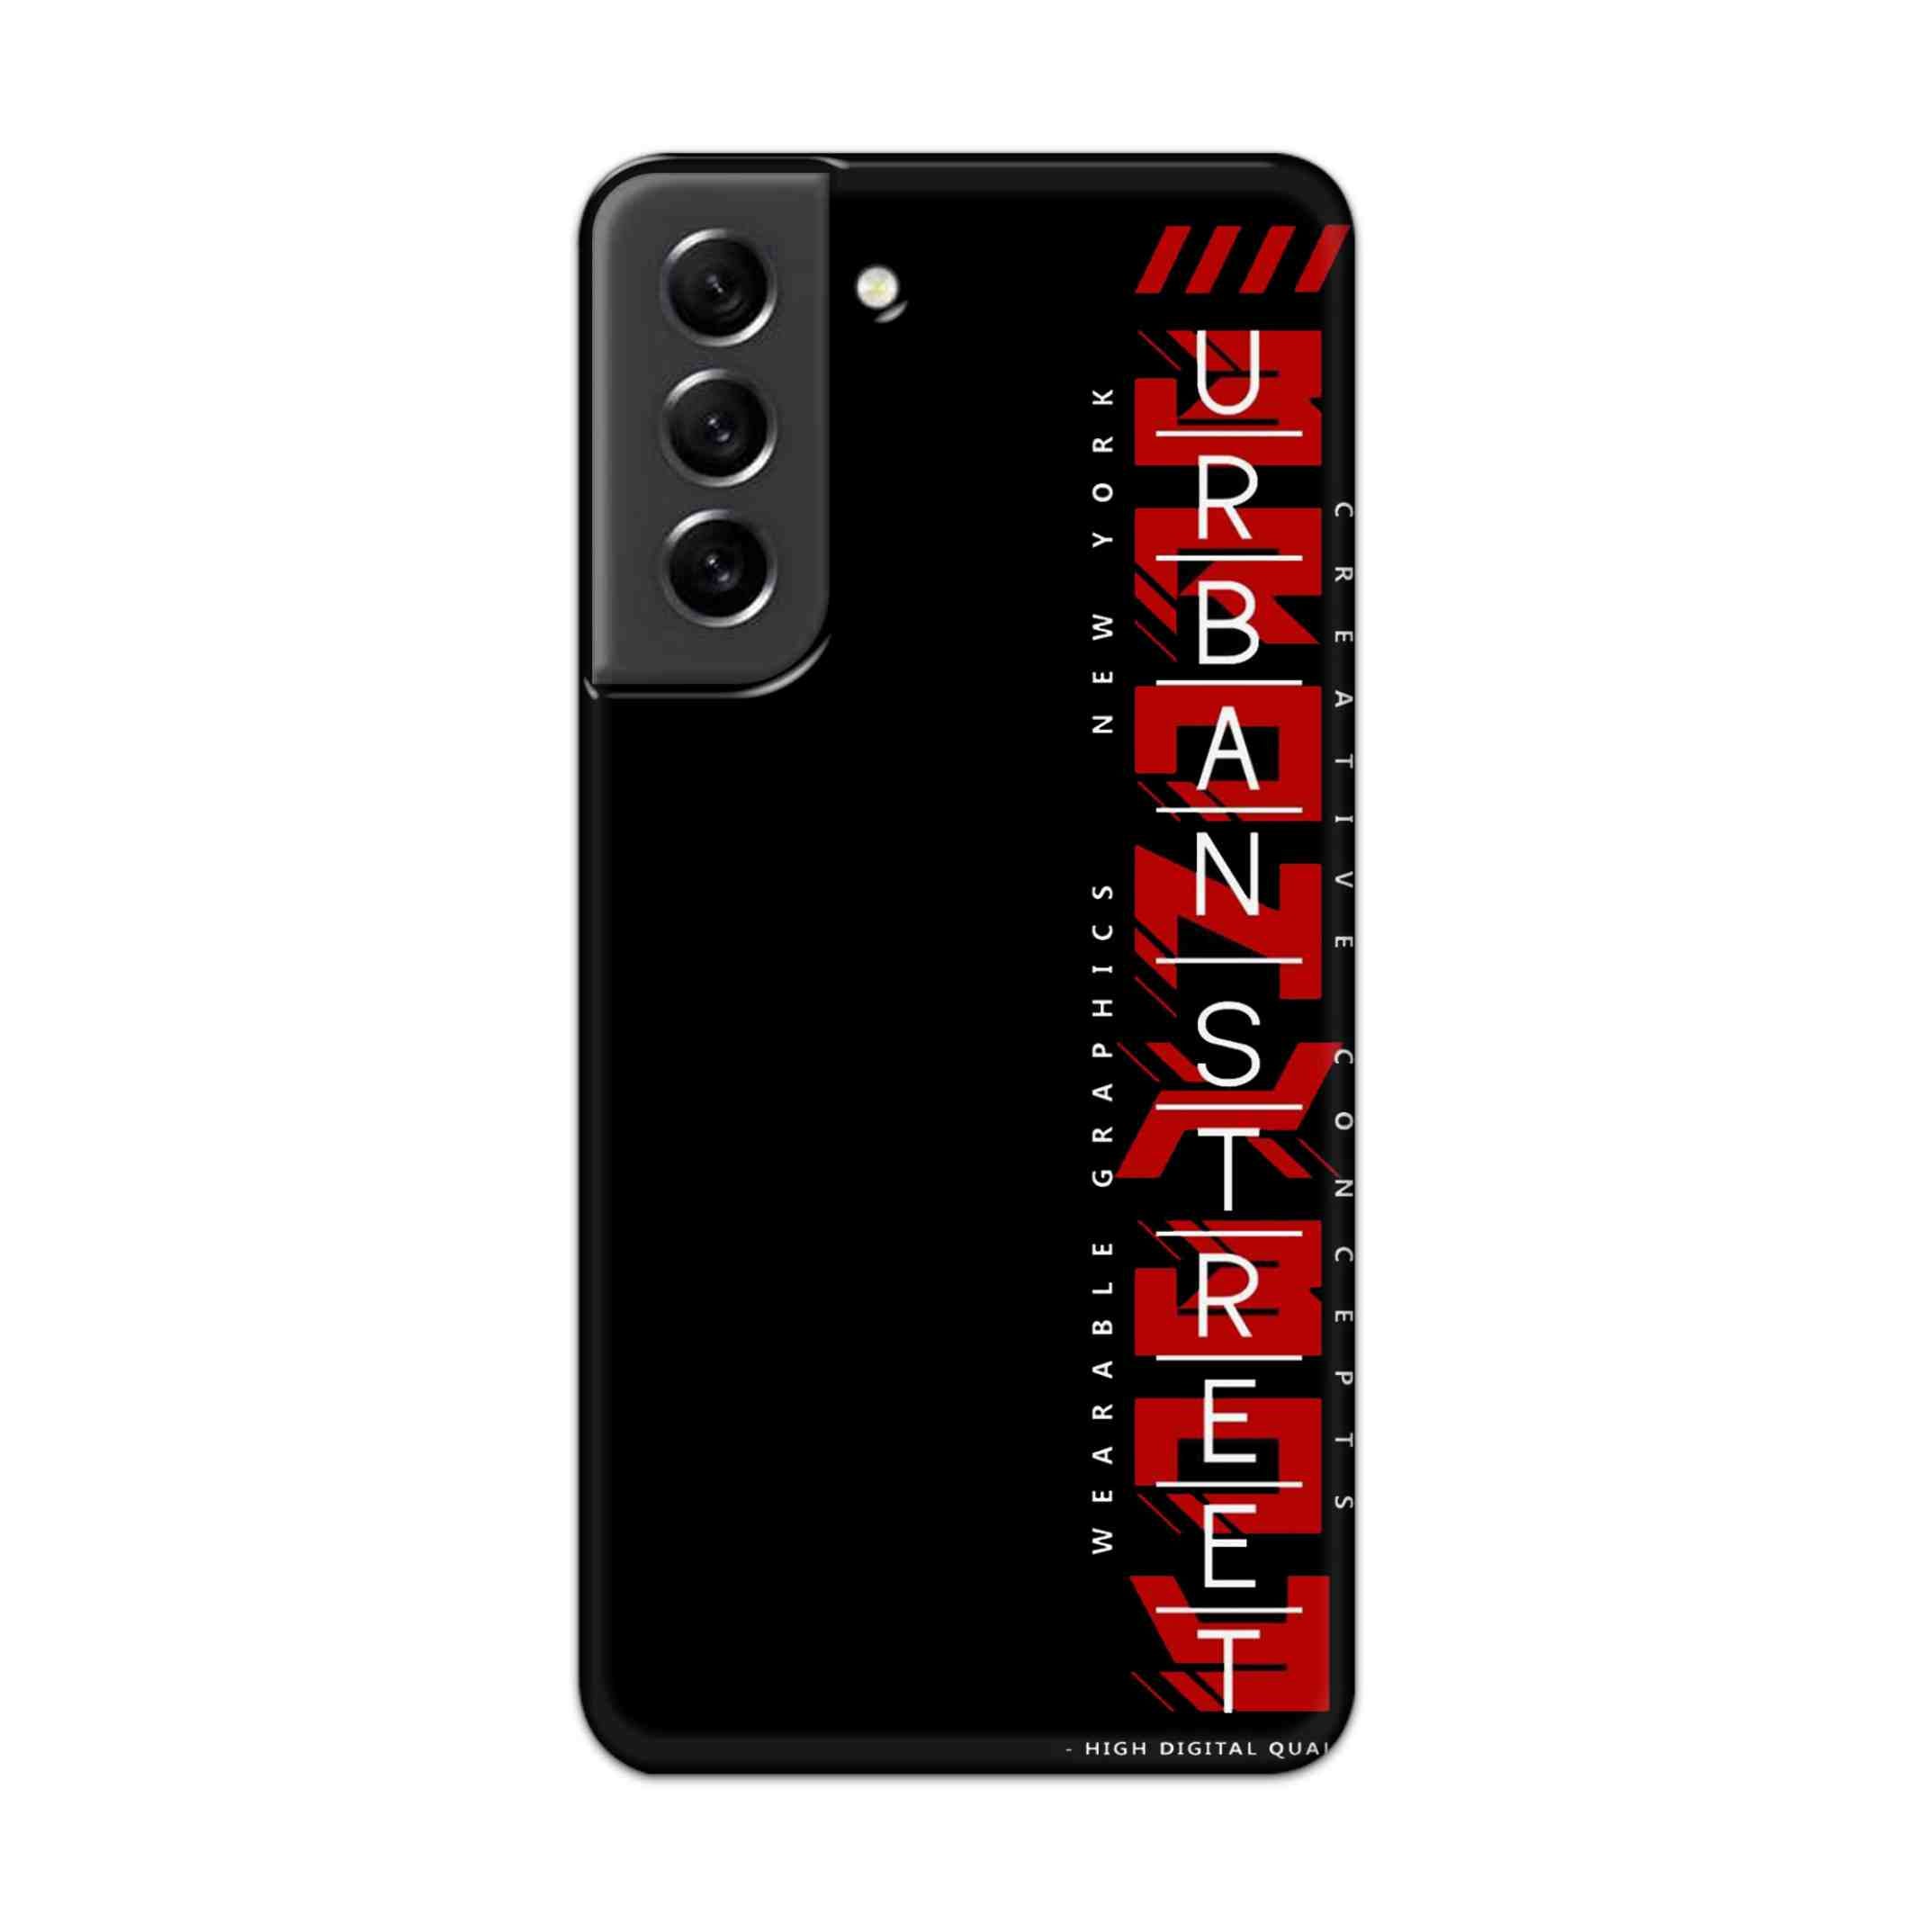 Buy Urban Street Hard Back Mobile Phone Case Cover For Samsung S21 FE Online